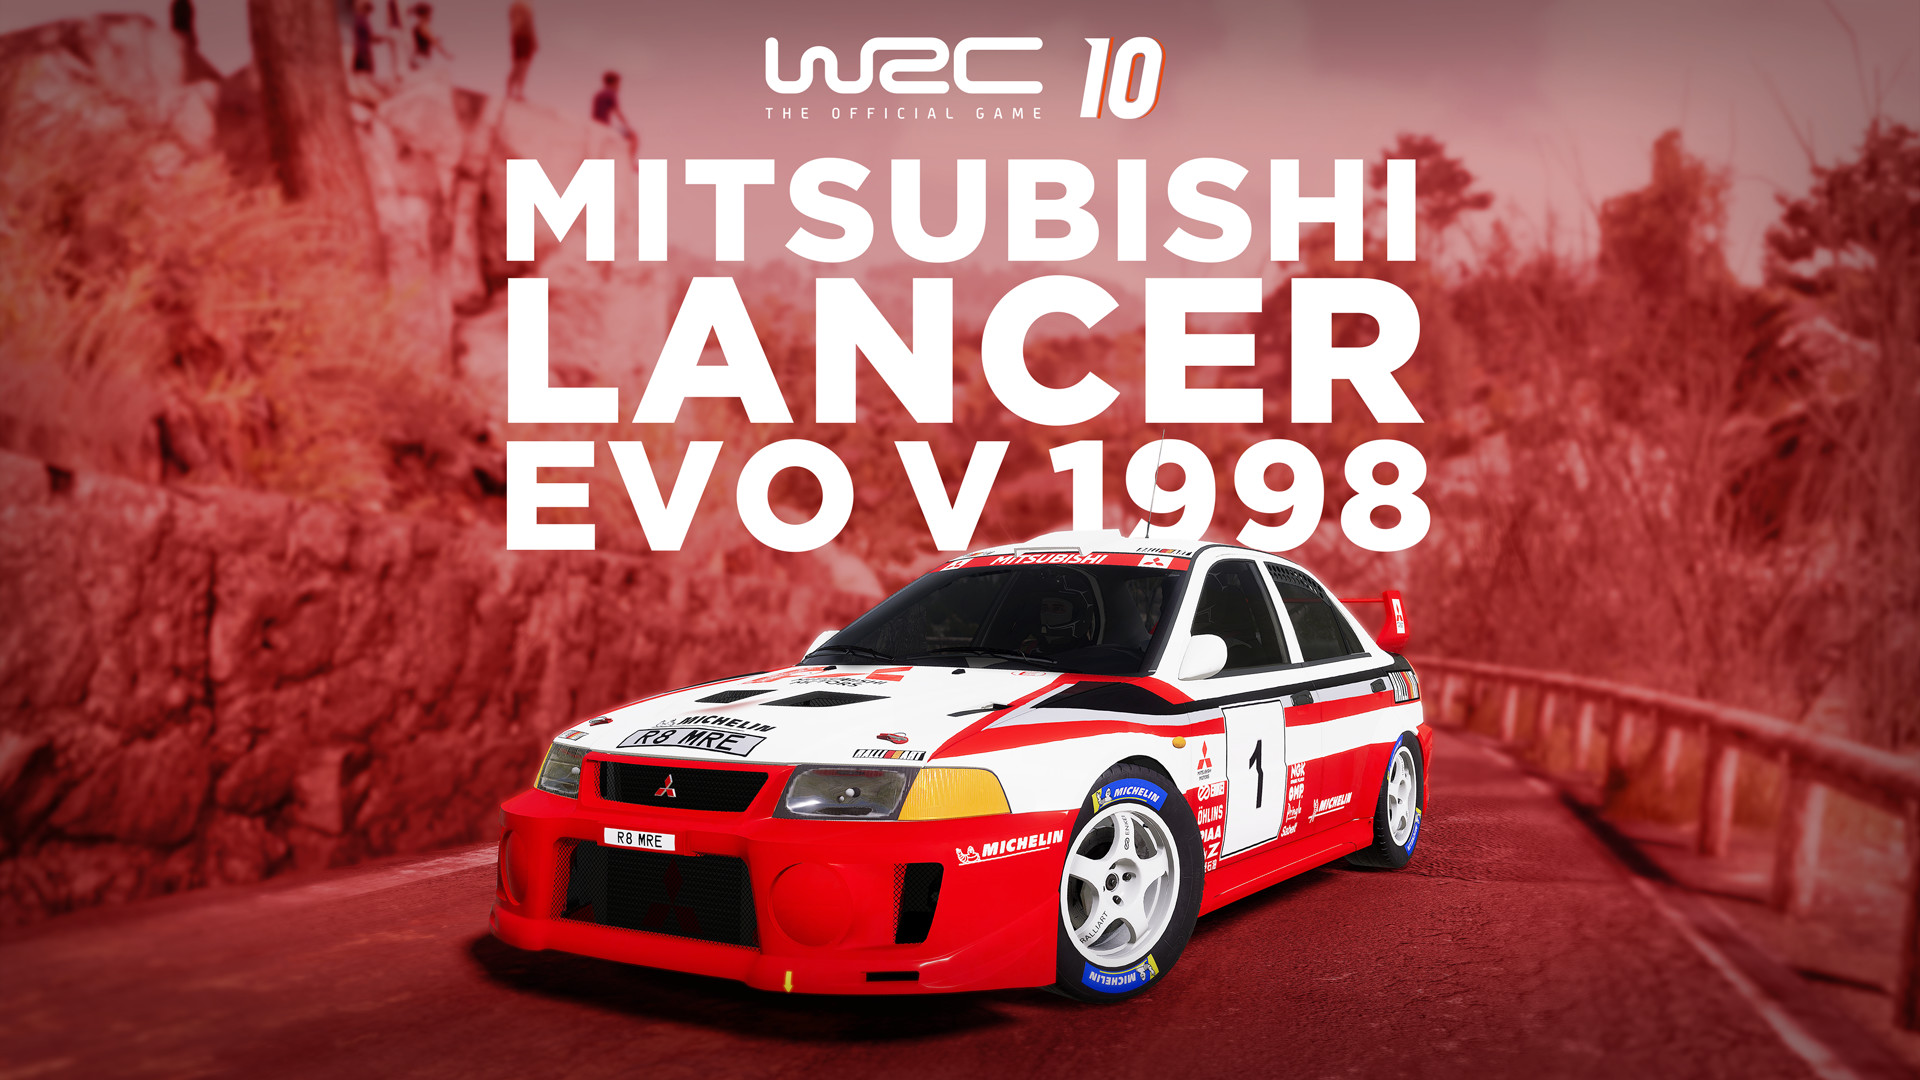 (2.69$) WRC 10 - Mitsubishi Lancer Evo V 1998 DLC Steam CD Key